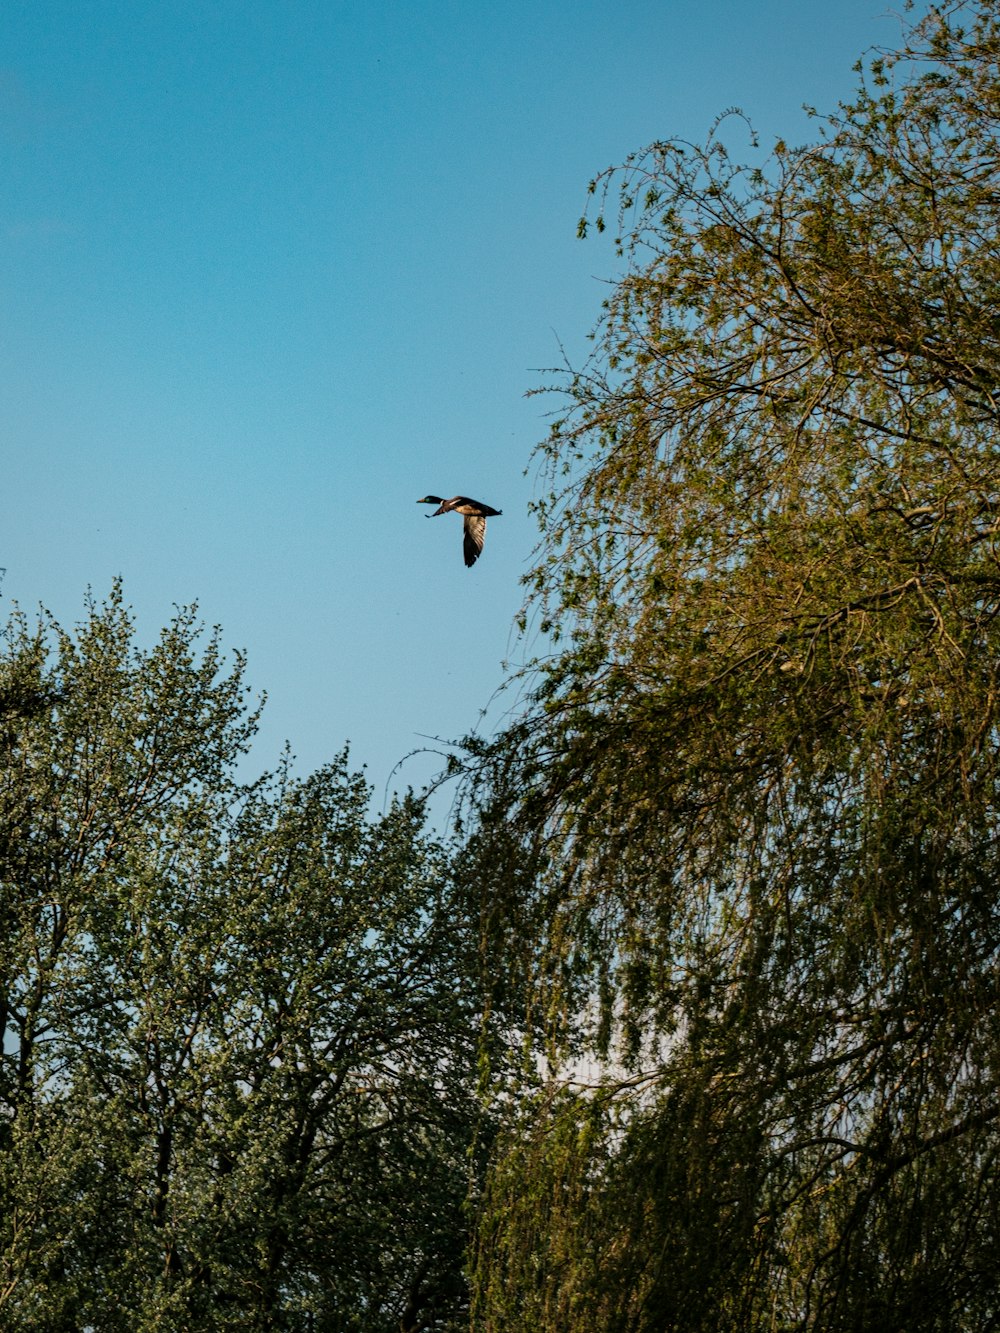 a bird flying through a blue sky above trees